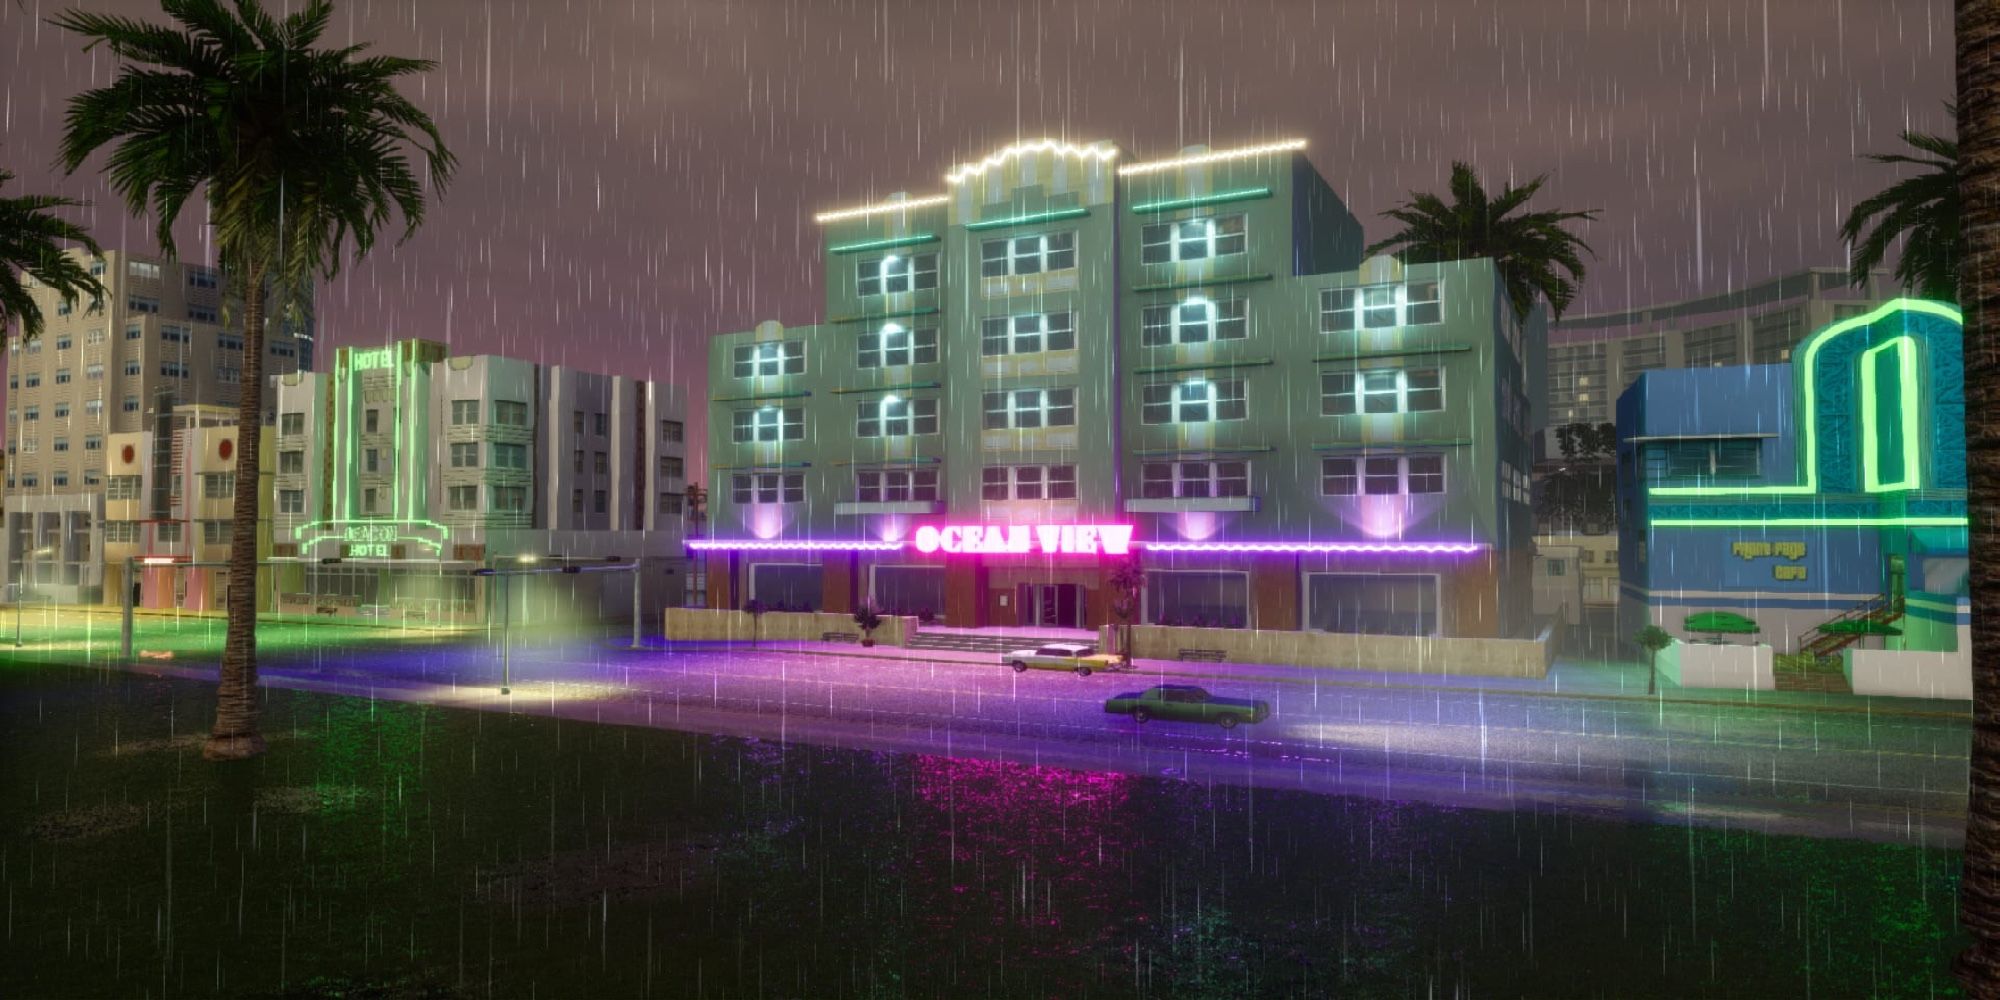 Ocean City Hotel from GTA Vice City may return in GTA 6.